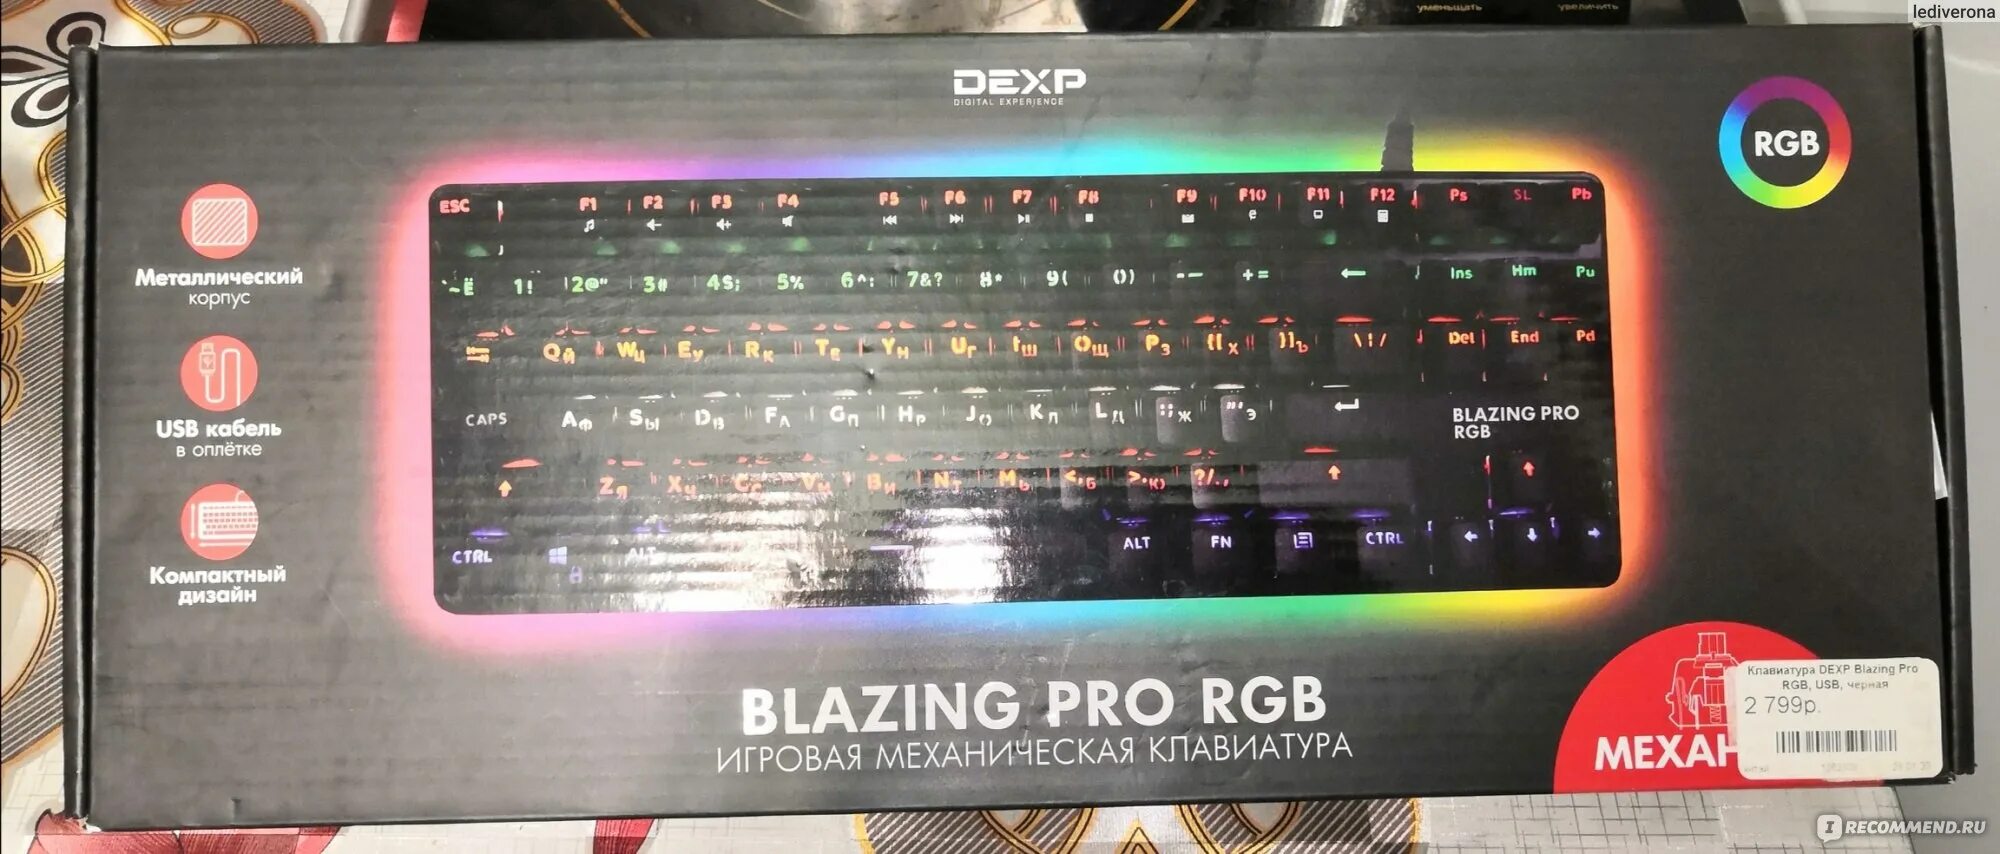 Клавиатура blazing pro подсветка. Раскладка клавиатуры DEXP Blazing Pro RGB. Клавиатура DEXP Blazing Pro RGB USB. Blazing Pro клавиатура 80. DEXP Blazing Pro RGB белая.